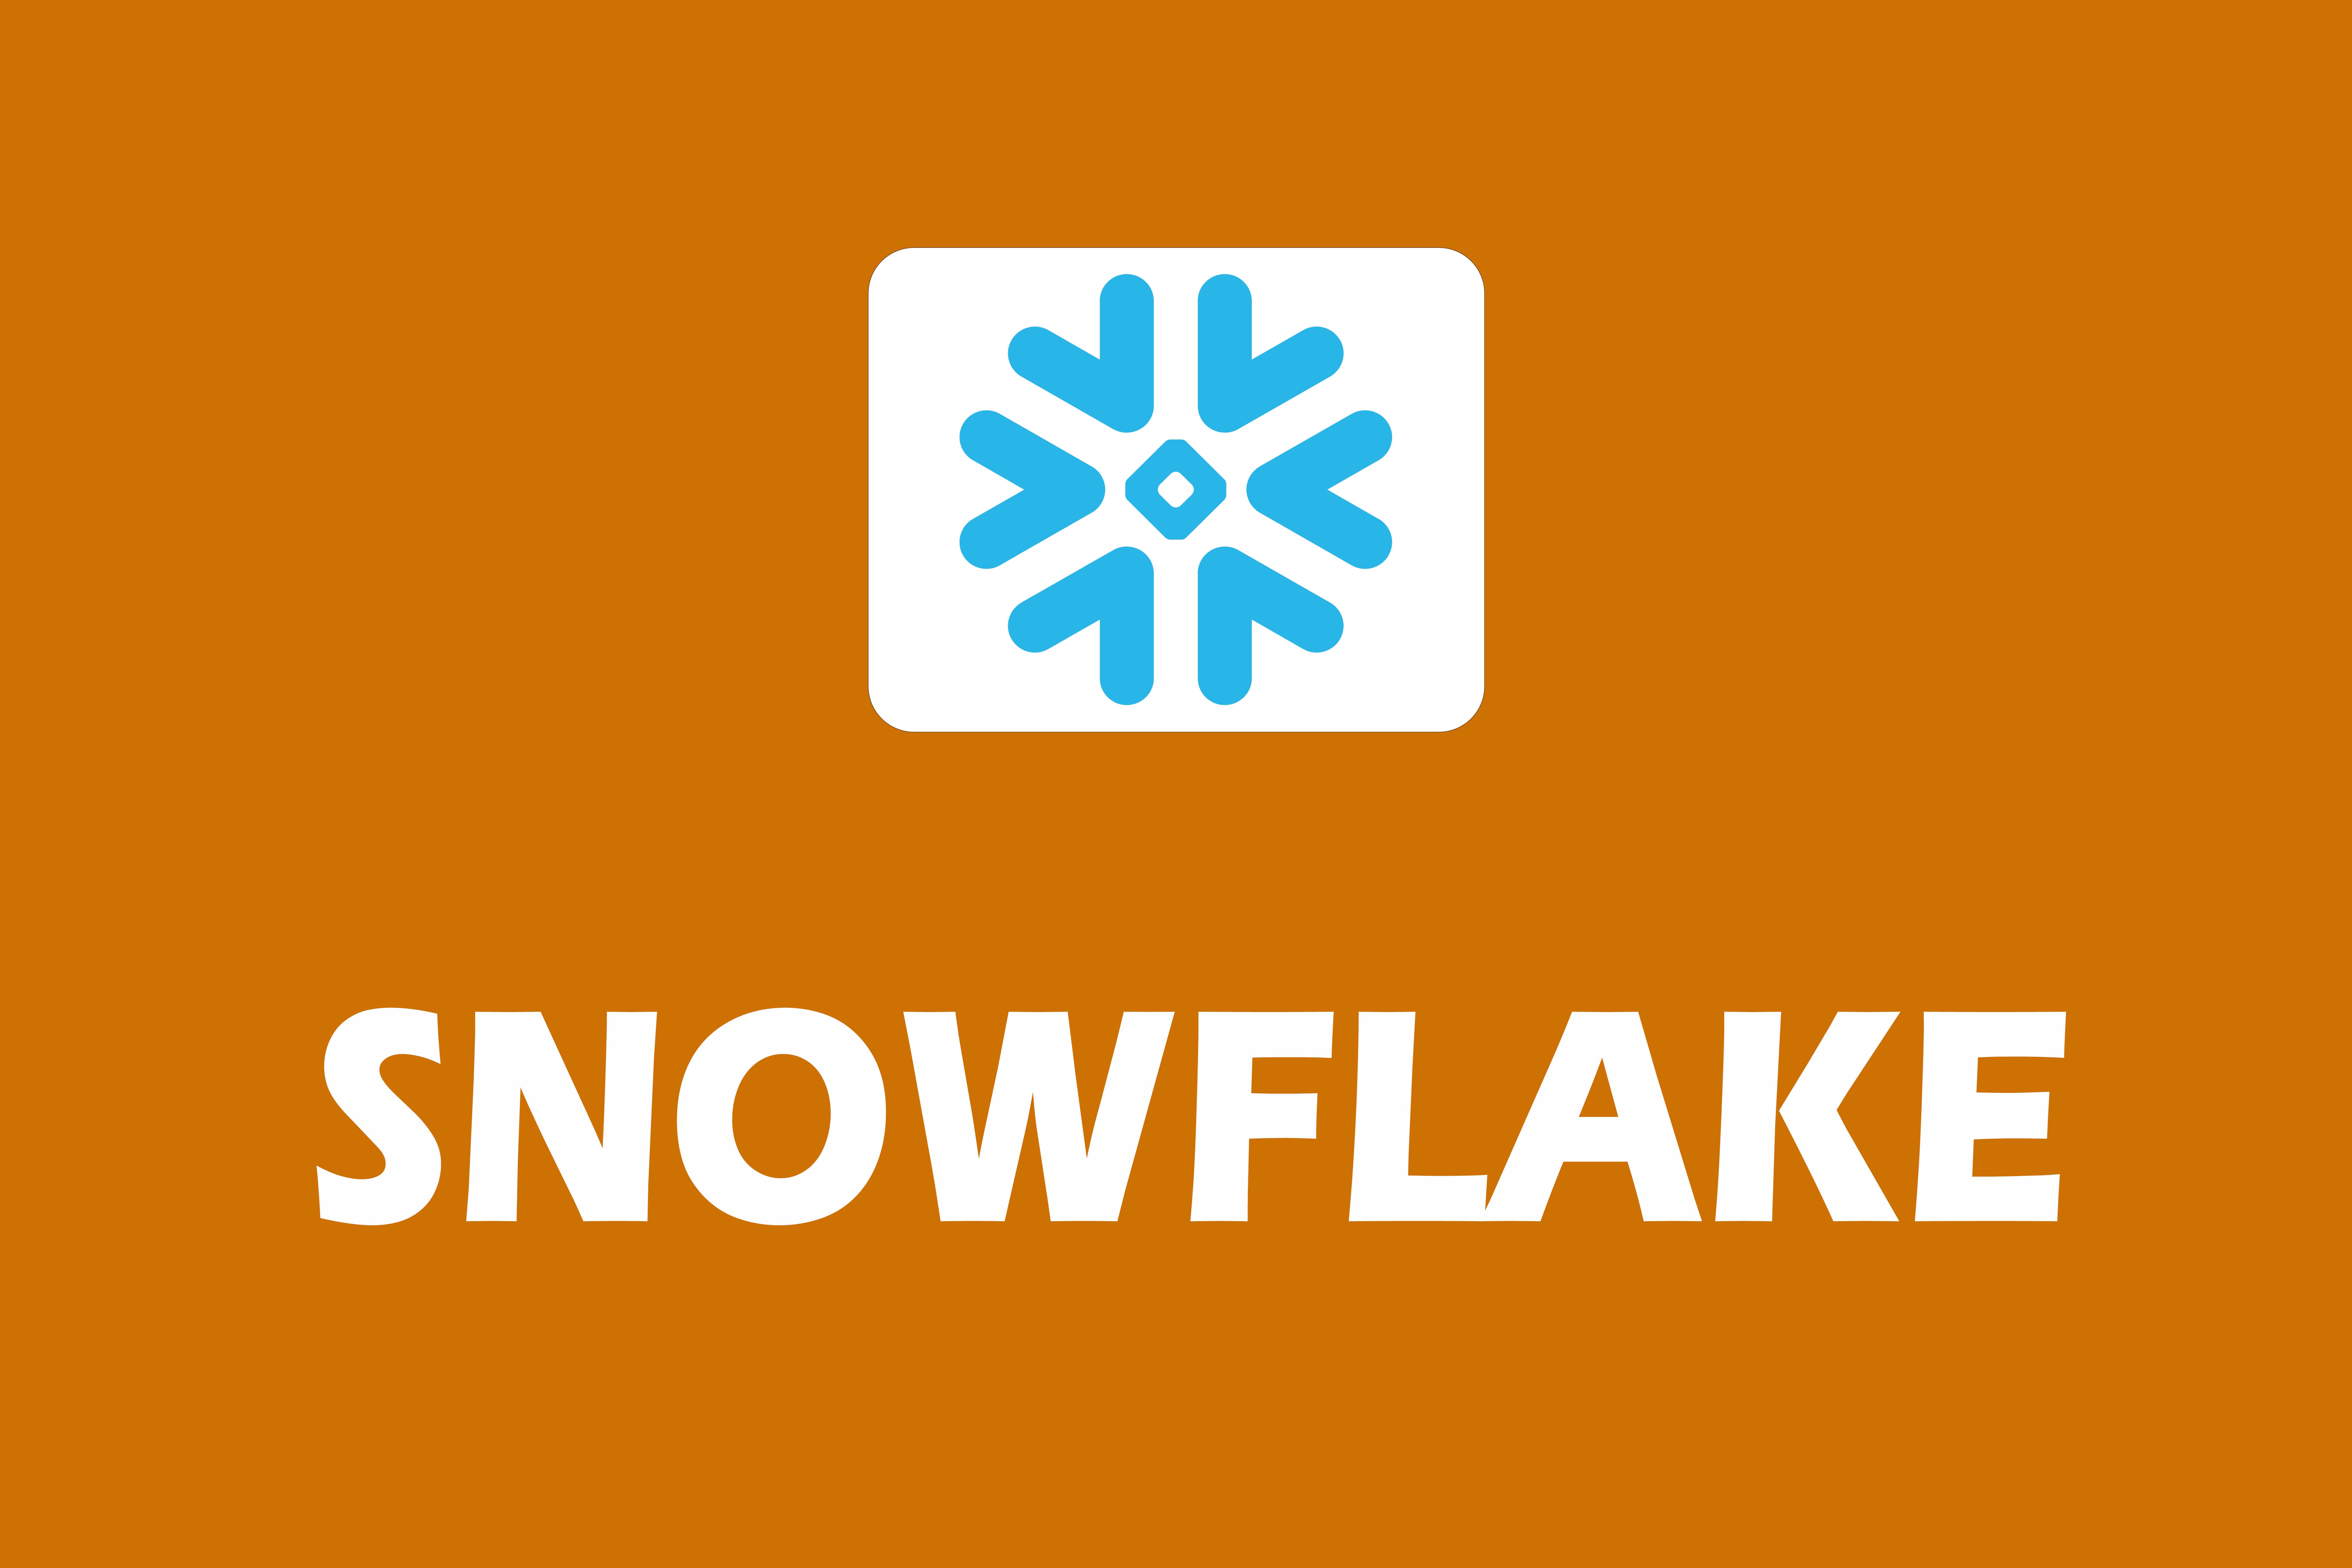 snowflake online training in hyderabad